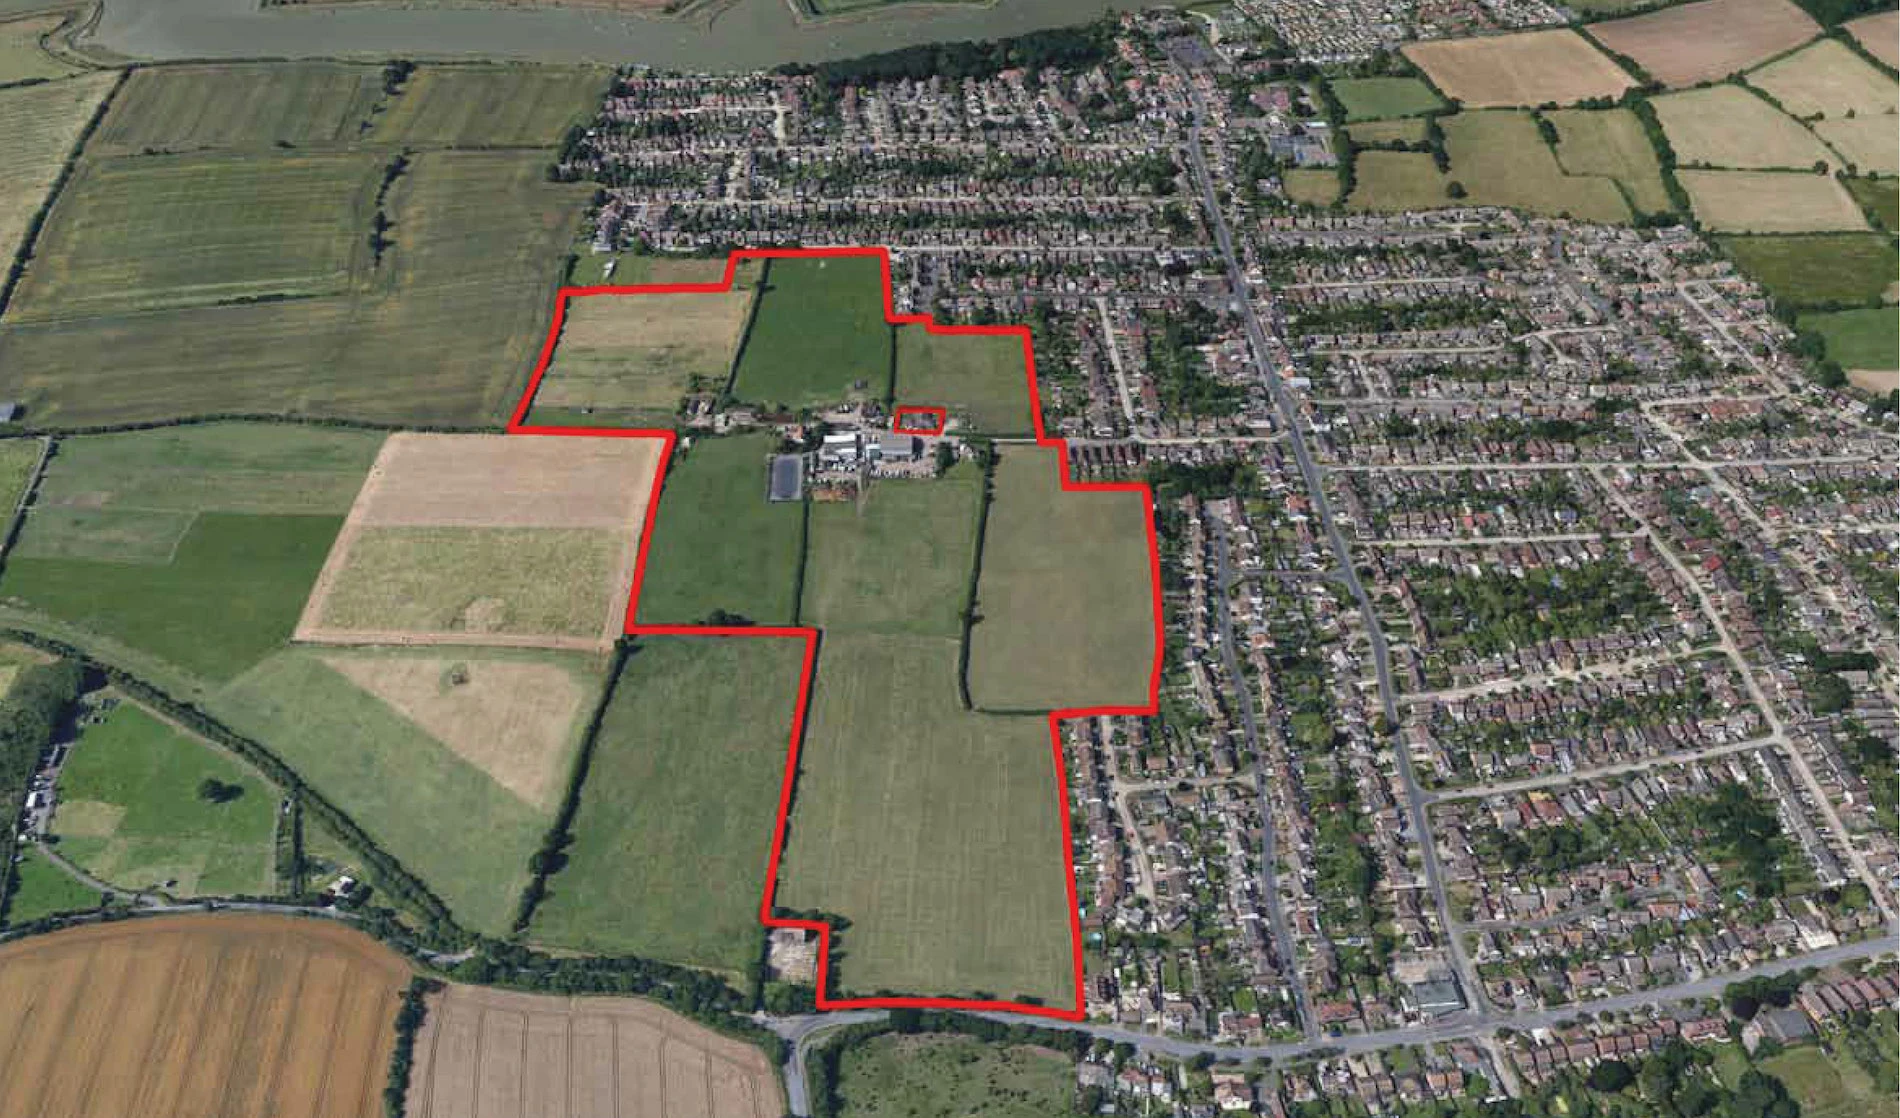  53 acre residential development site in Hullbridge Essex